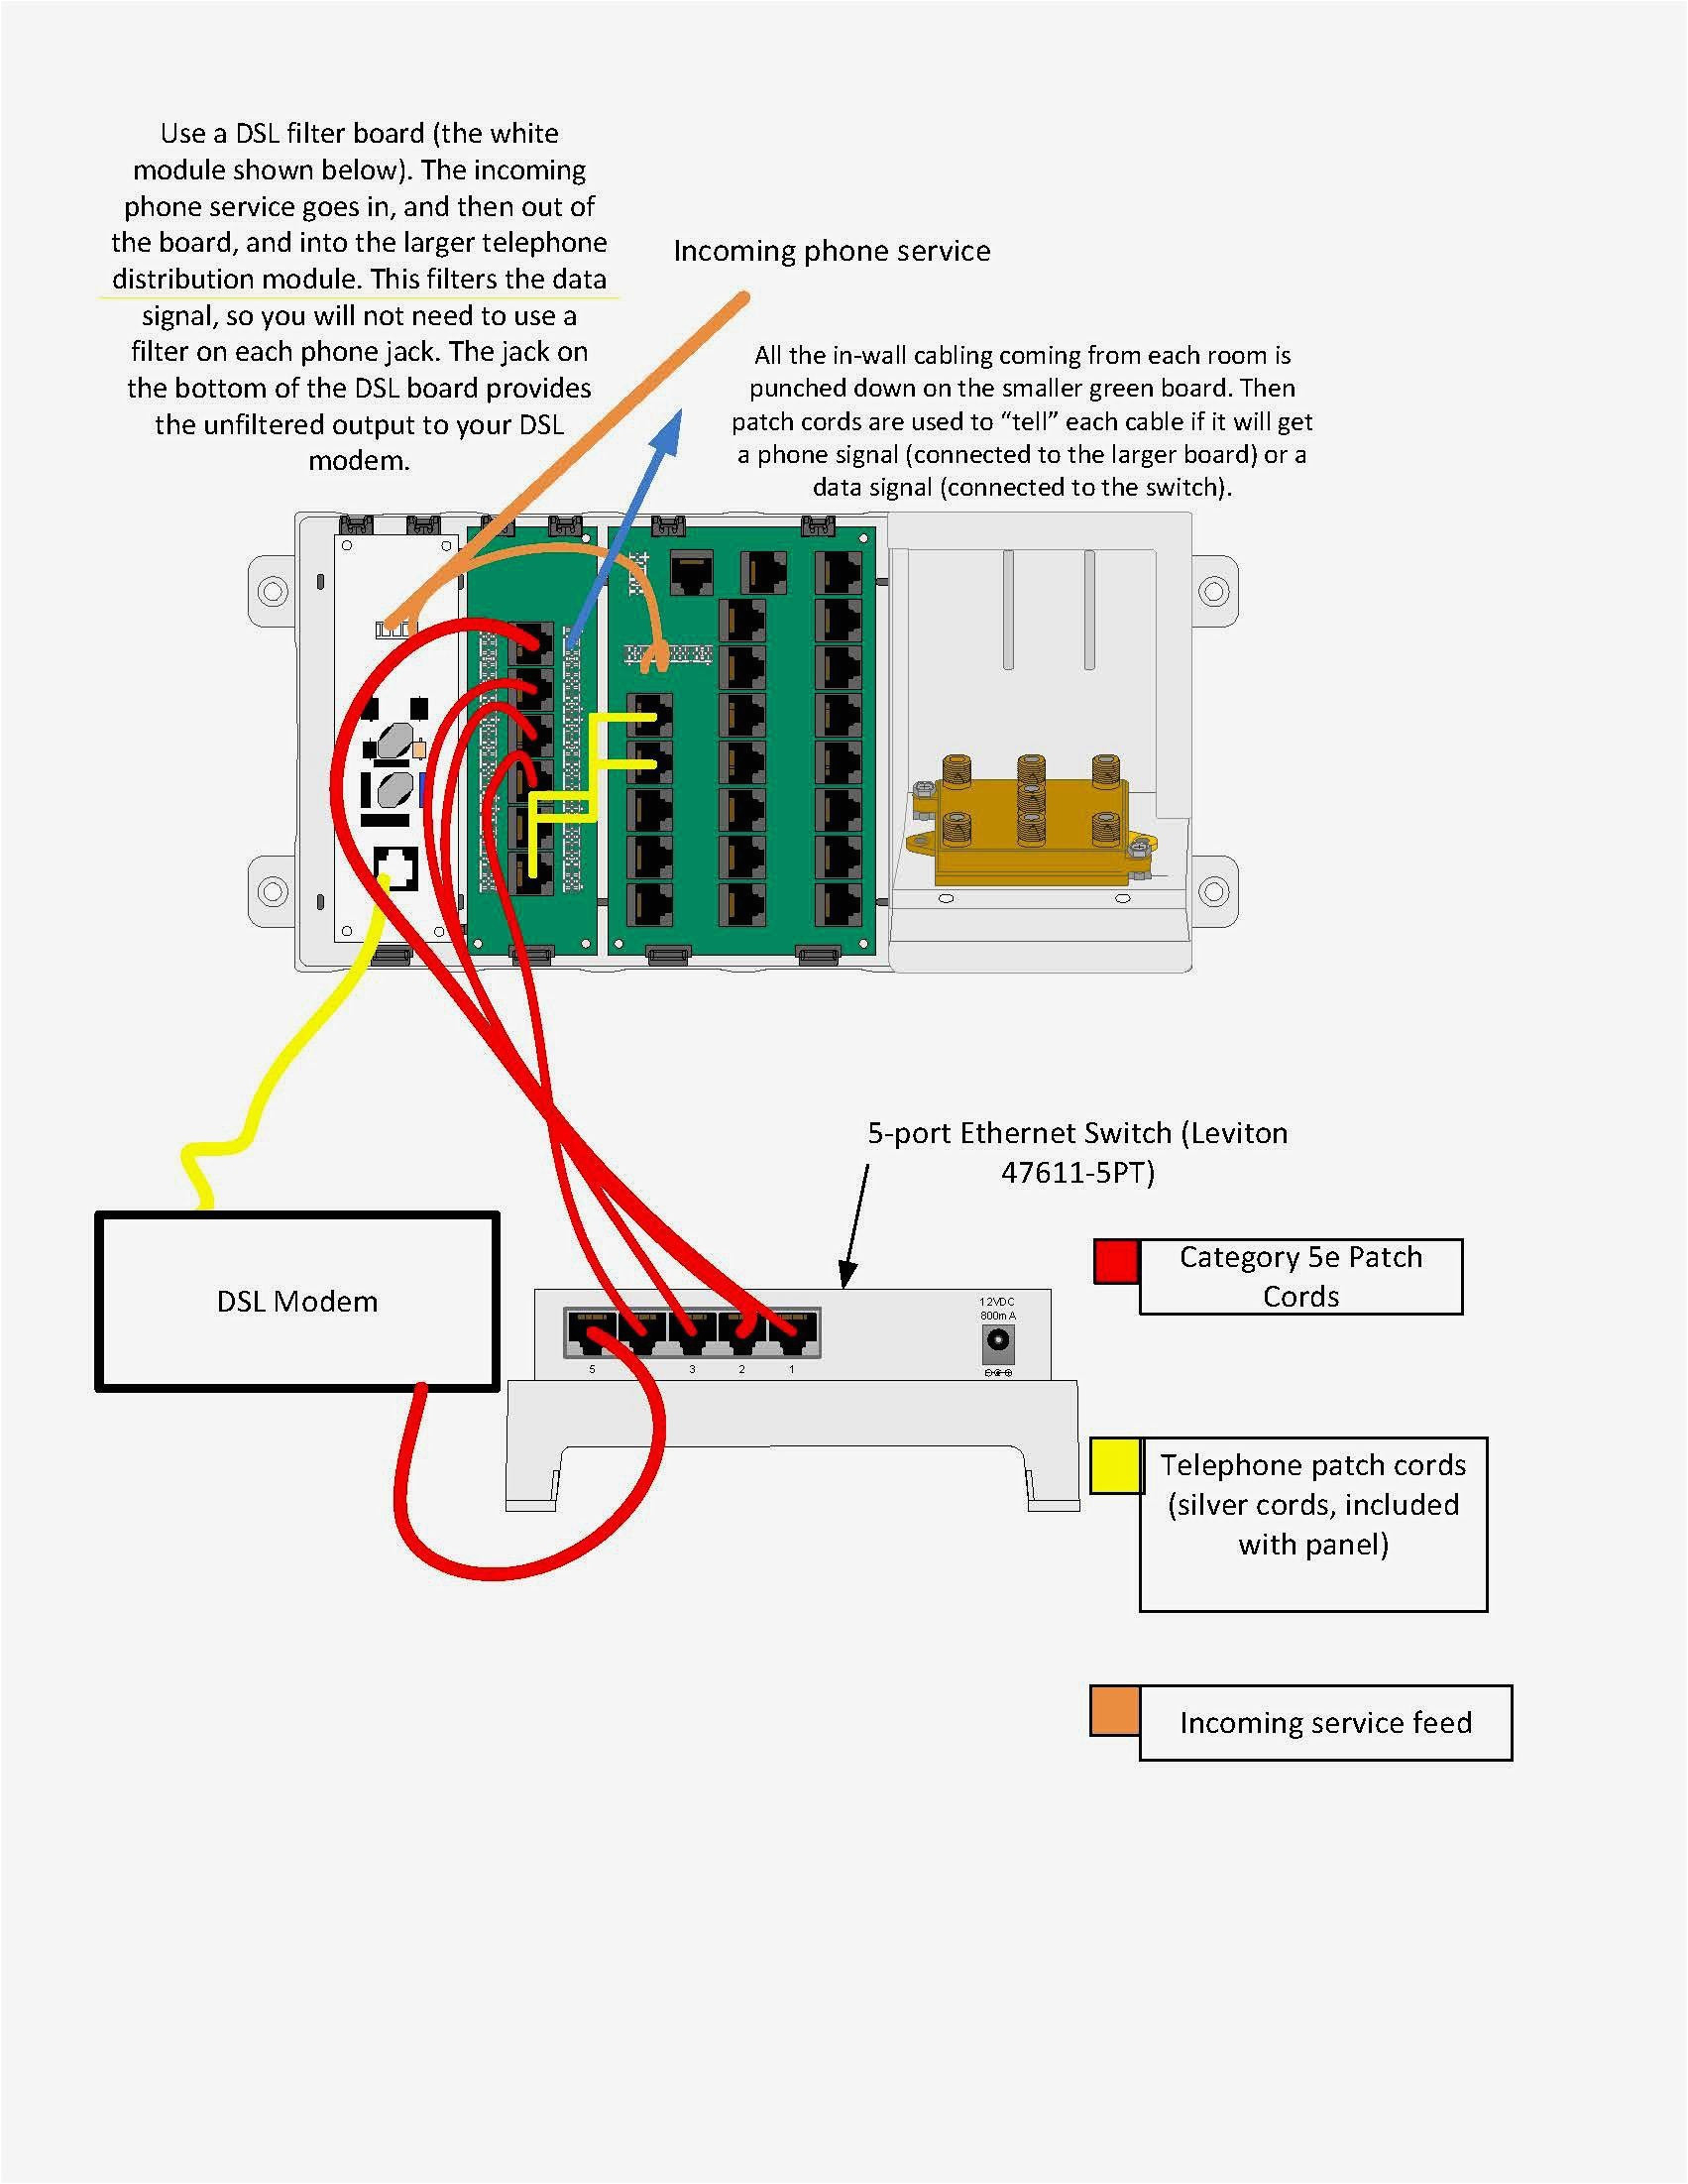 leviton cat5e patch panel wiring diagram wiring diagram for cat5 patch cable save cat 5e wiring diagram luxury cat5e ethernet wiring diagram network 19g jpg